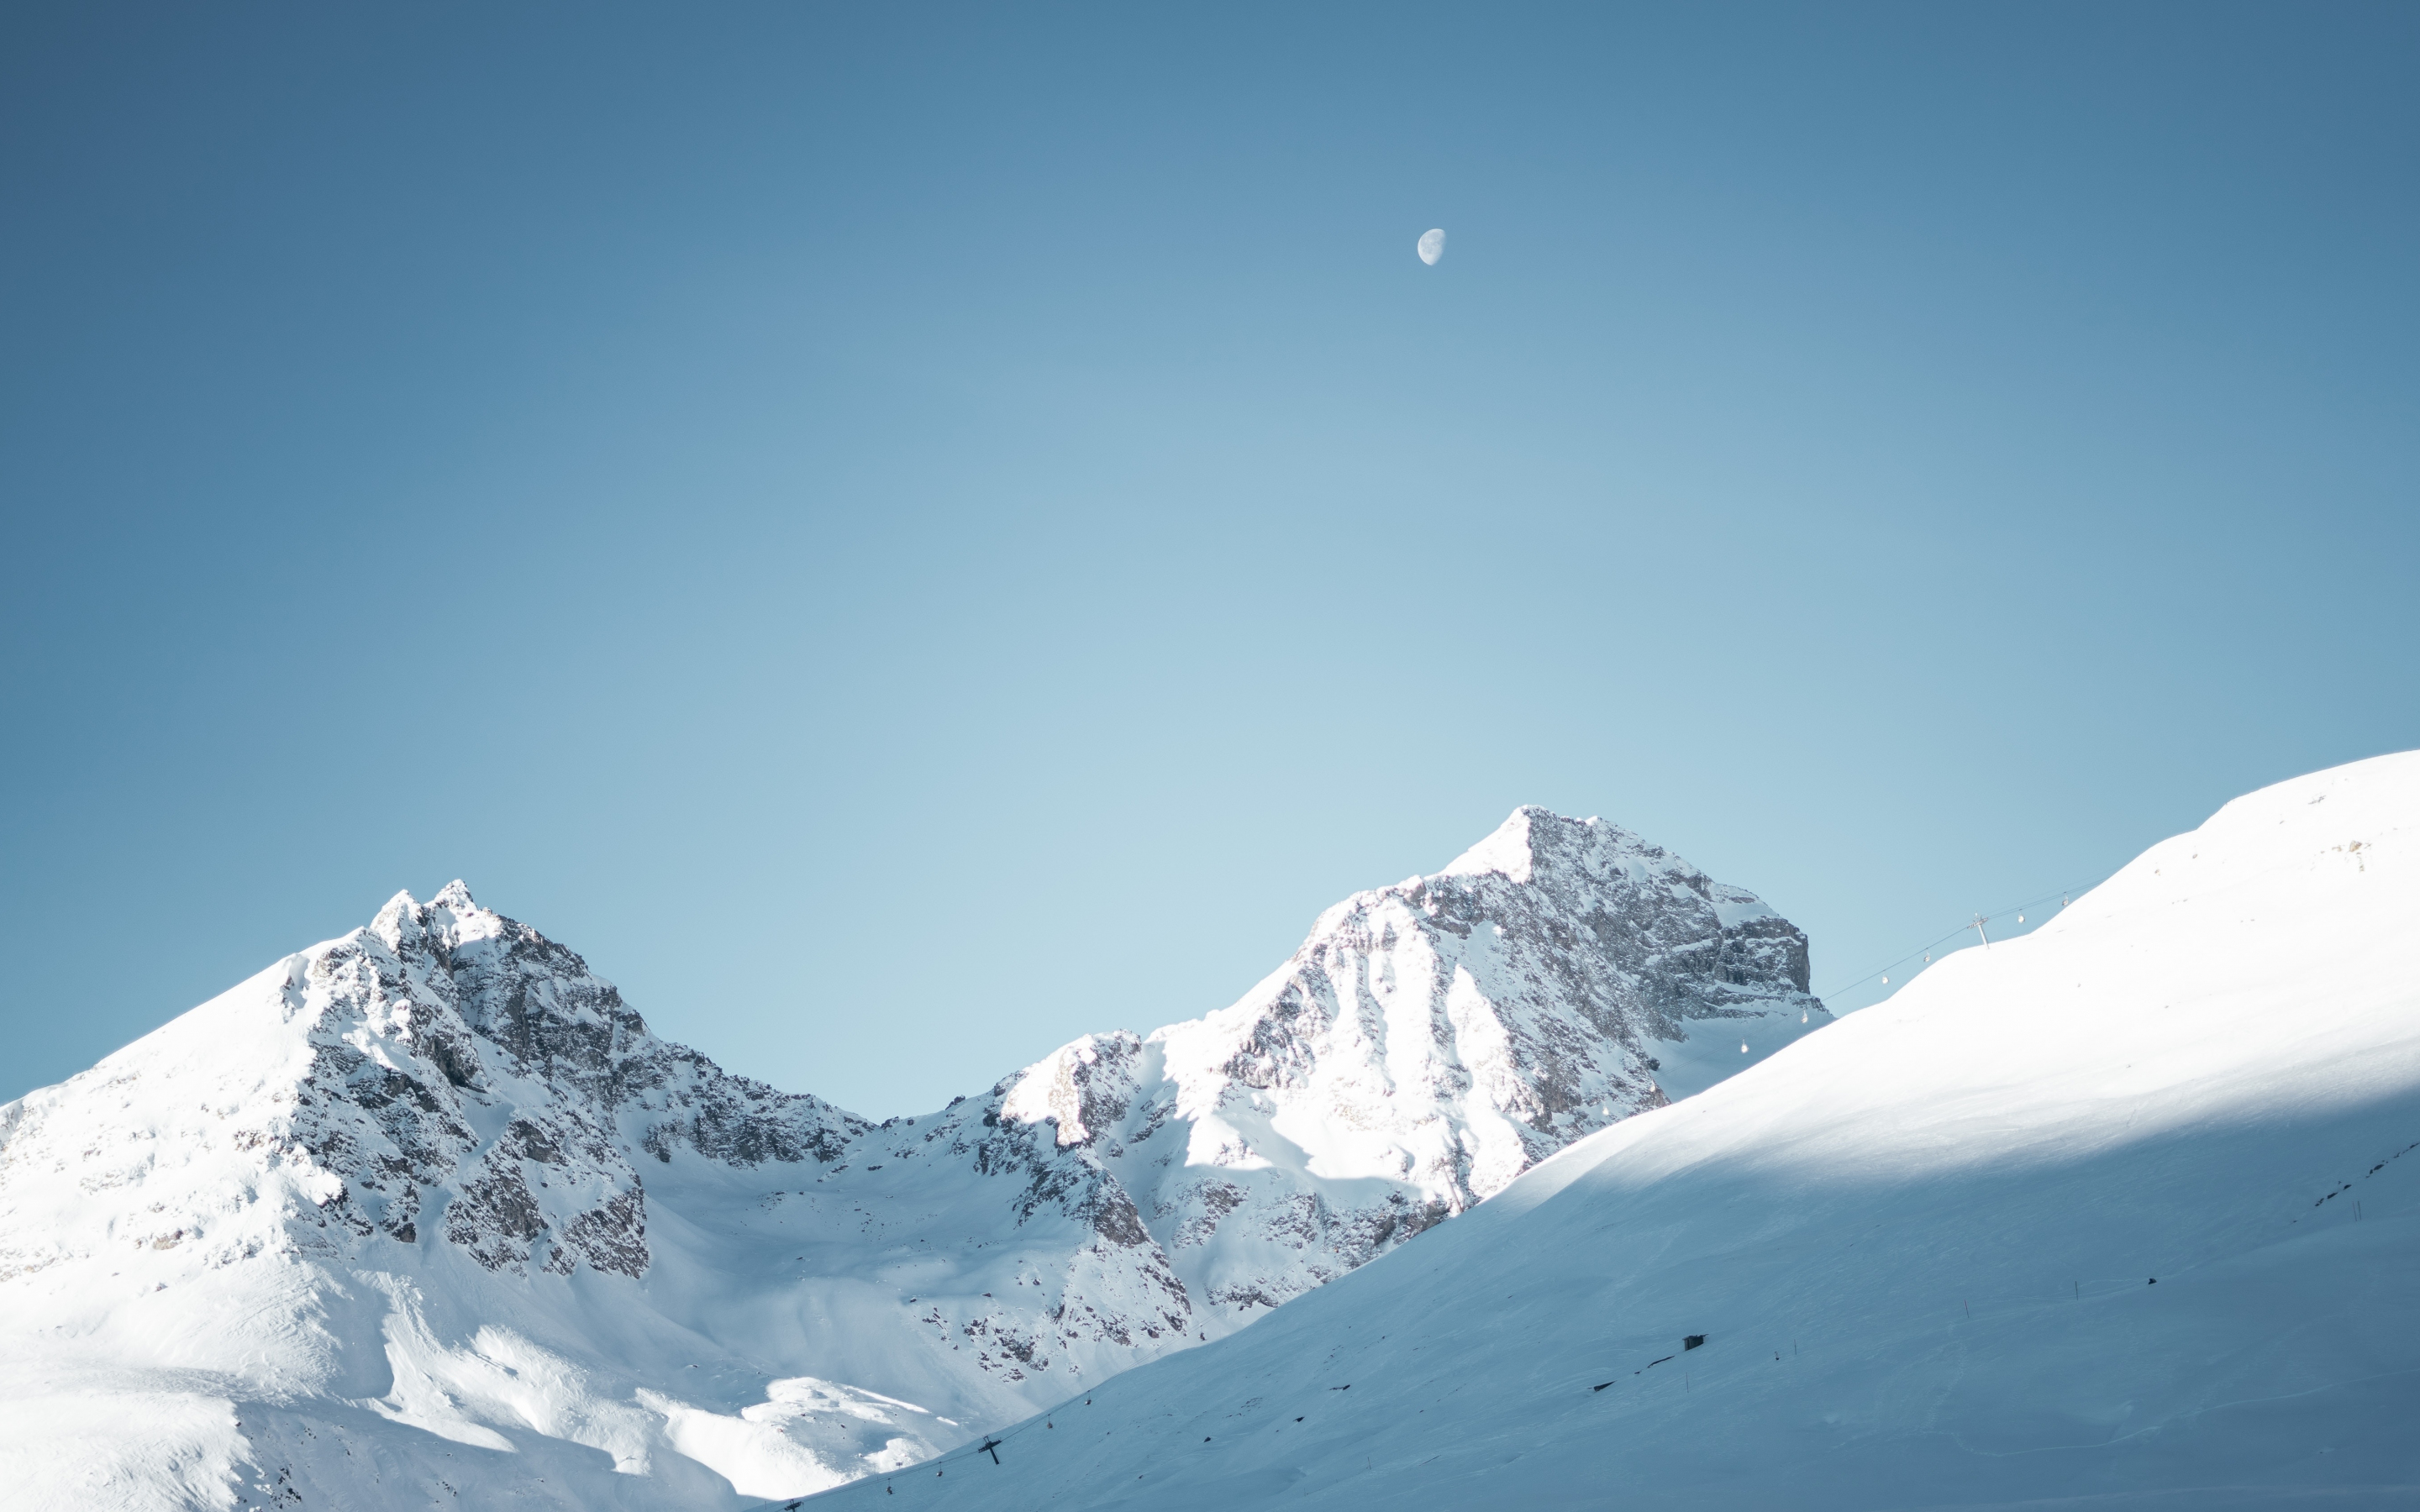 Glacier, mountains, landscape, blue sky, sunny day, nature, 2880x1800 wallpaper